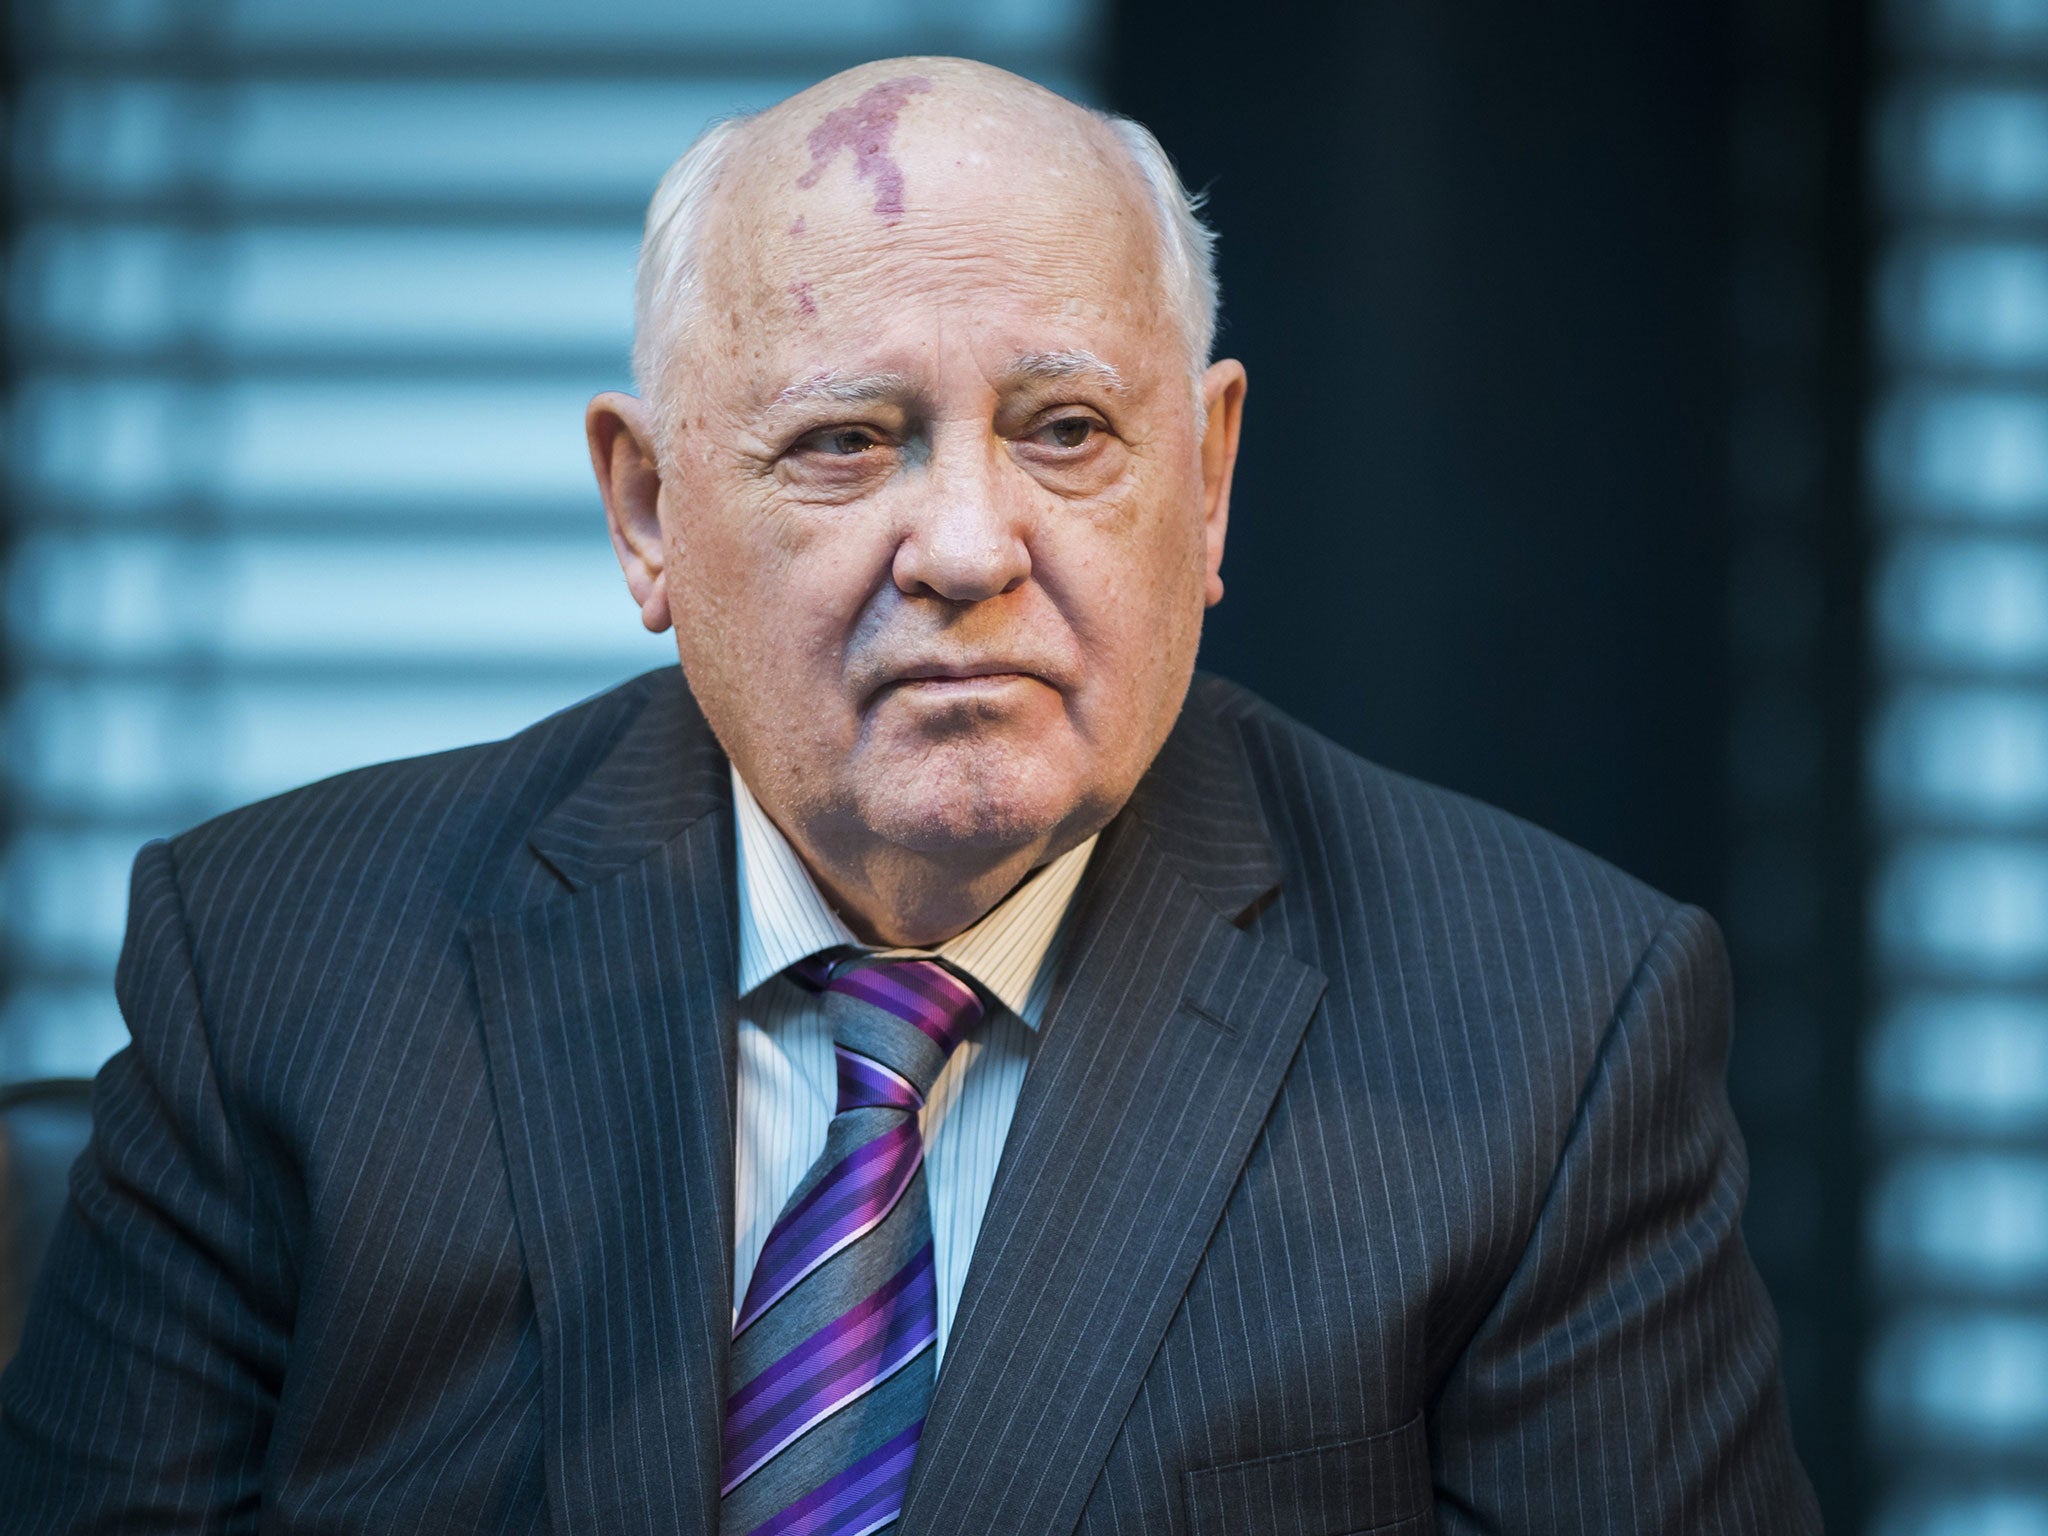 File image of Mikhail Gorbachev